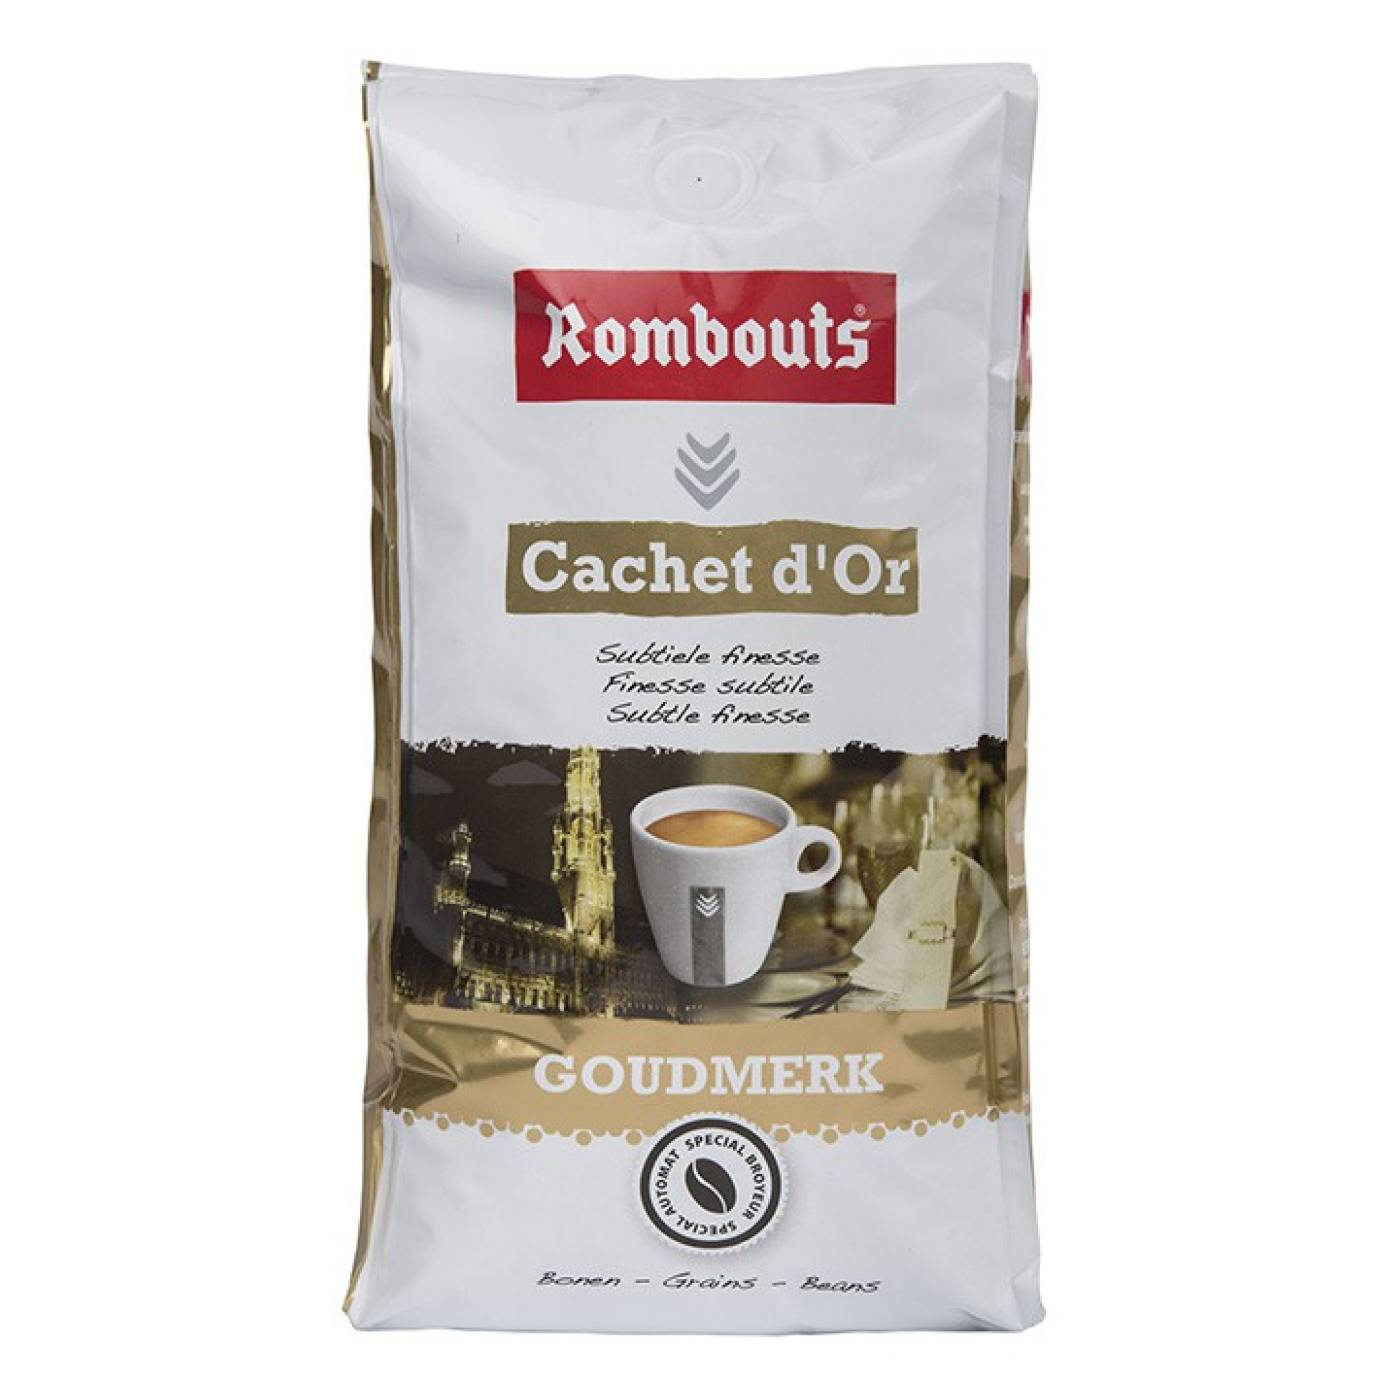 Вкусы и качество кофе rombouts